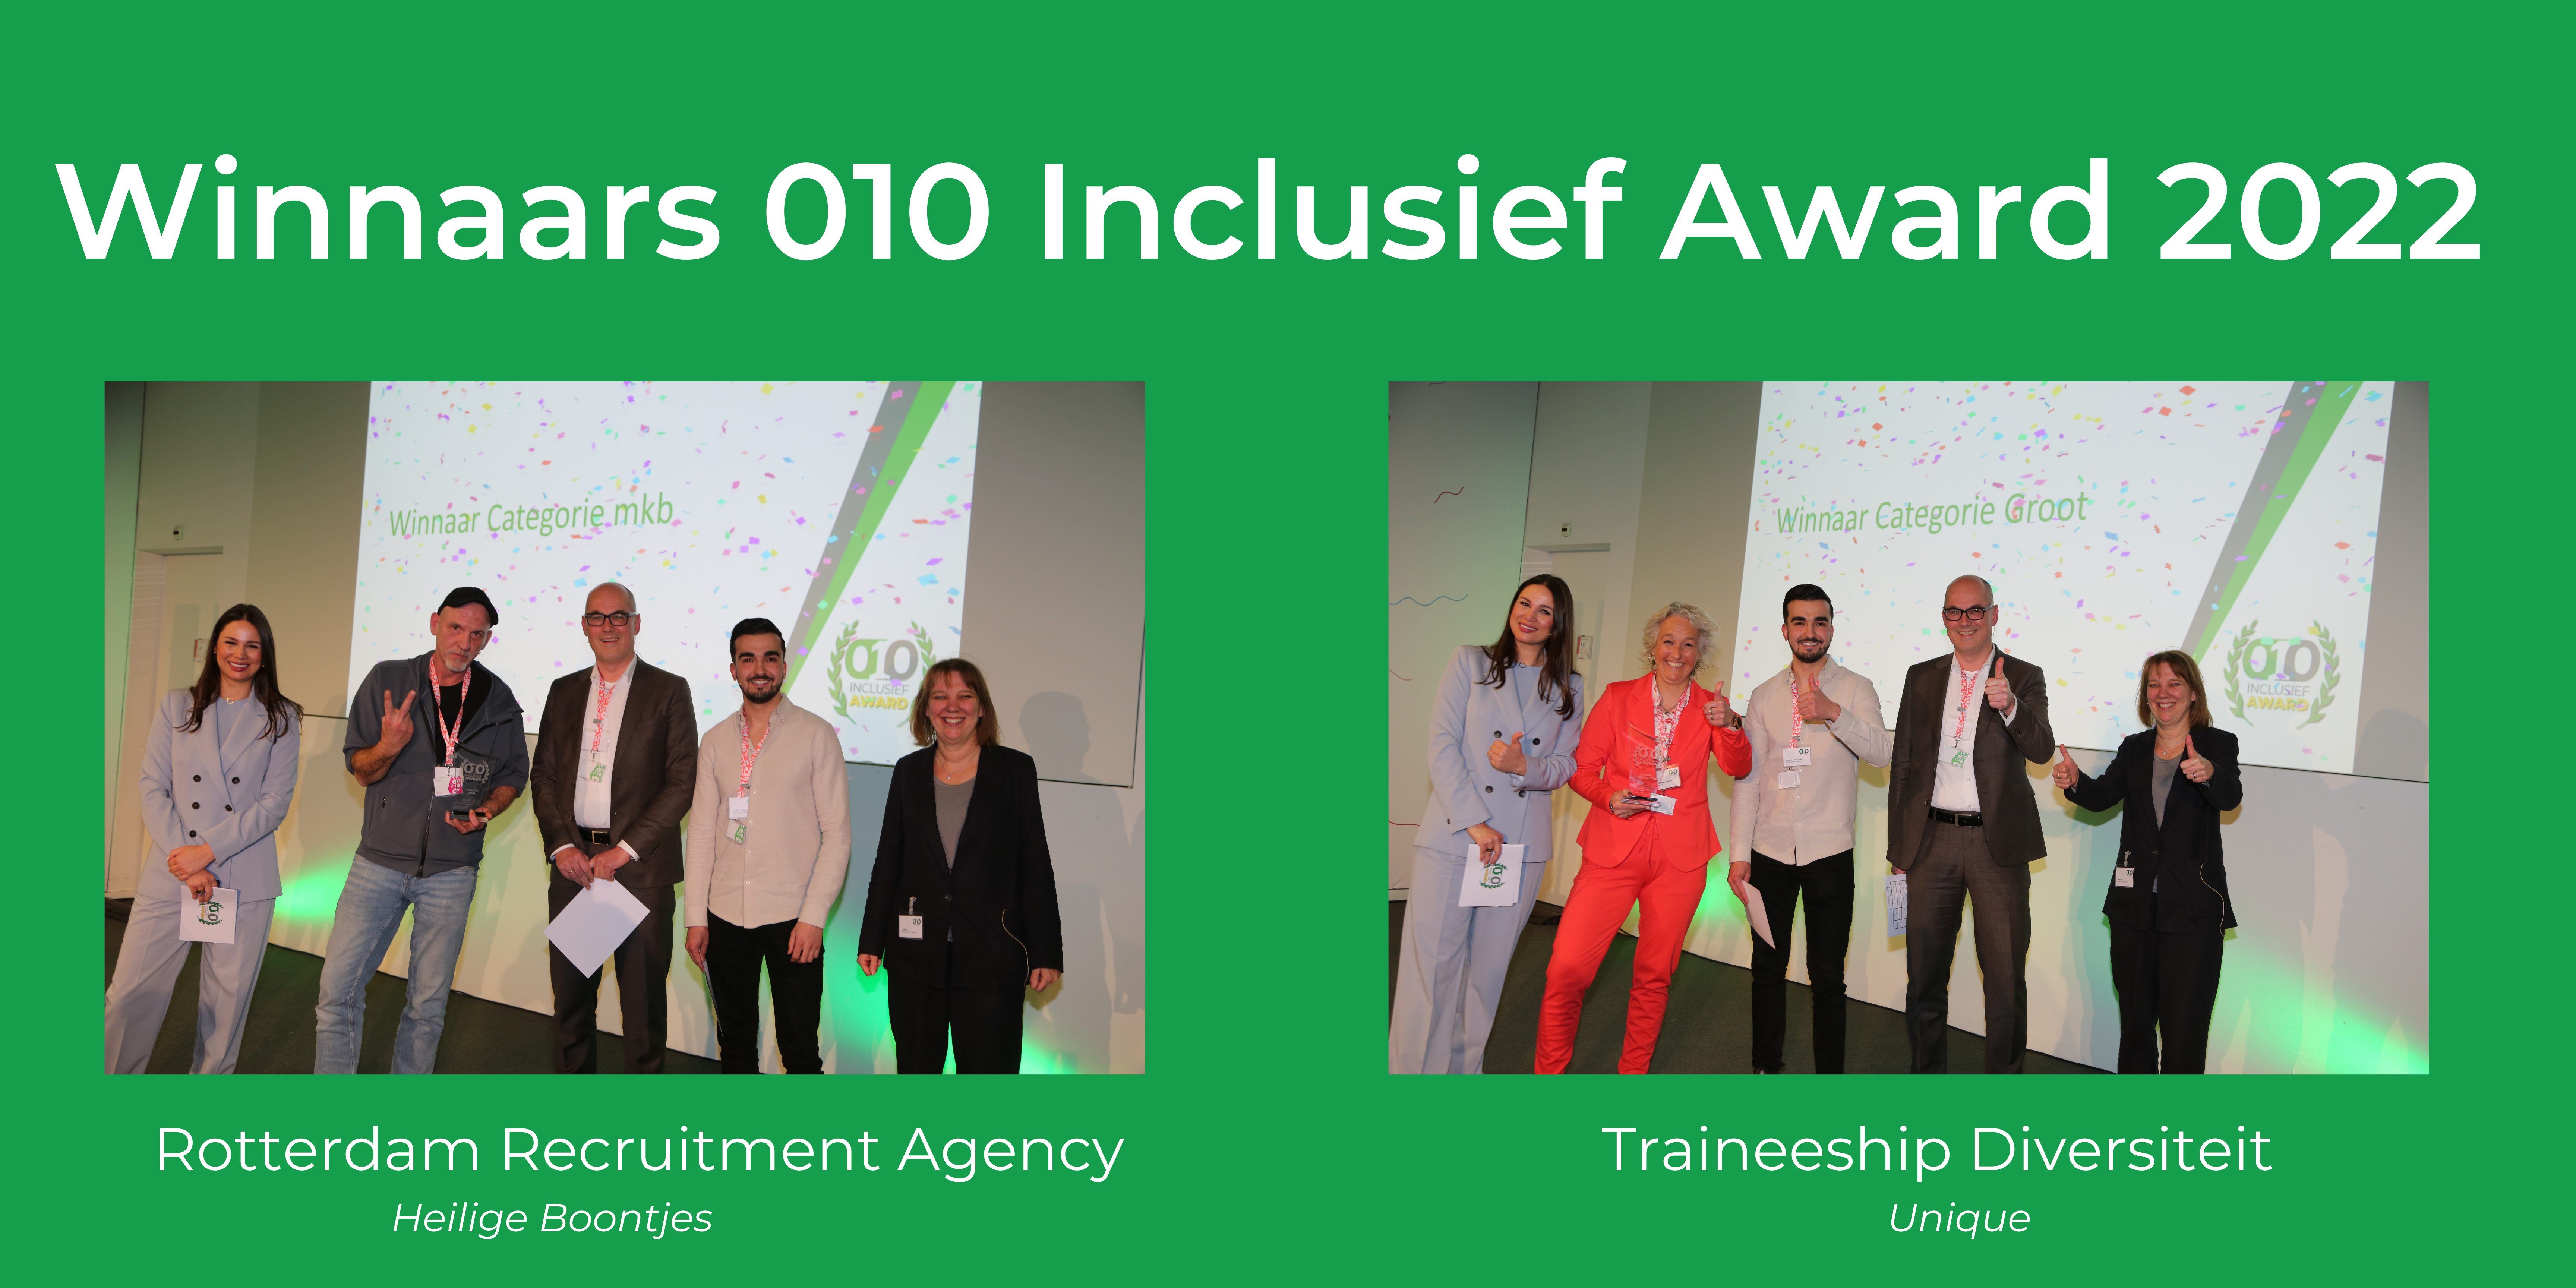 Rotterdam Recruitment Agency en Traineeship Diversiteit winnen de 010 Inclusief Award